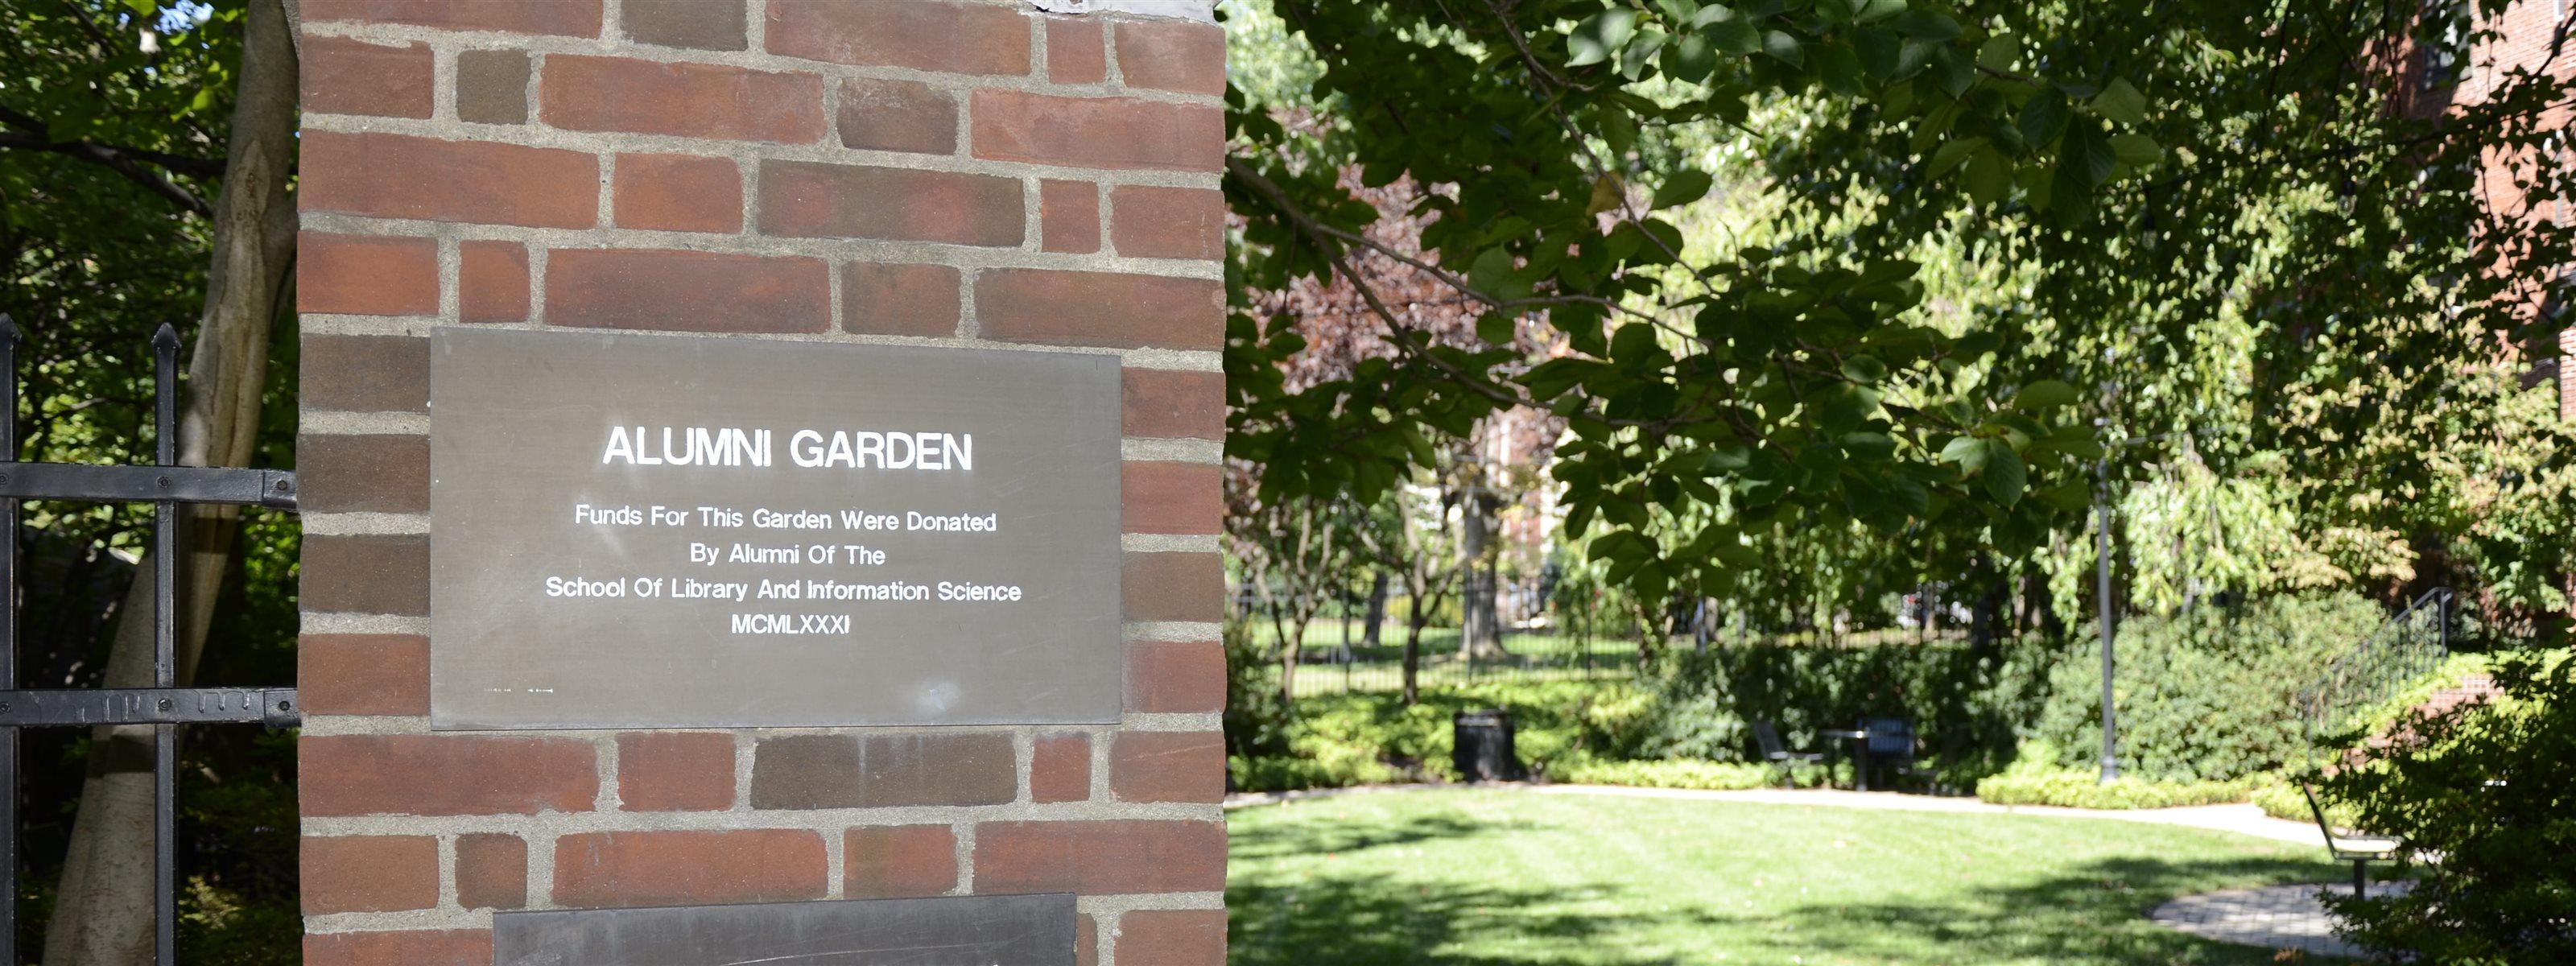 Alumni Garden near the Rush Building